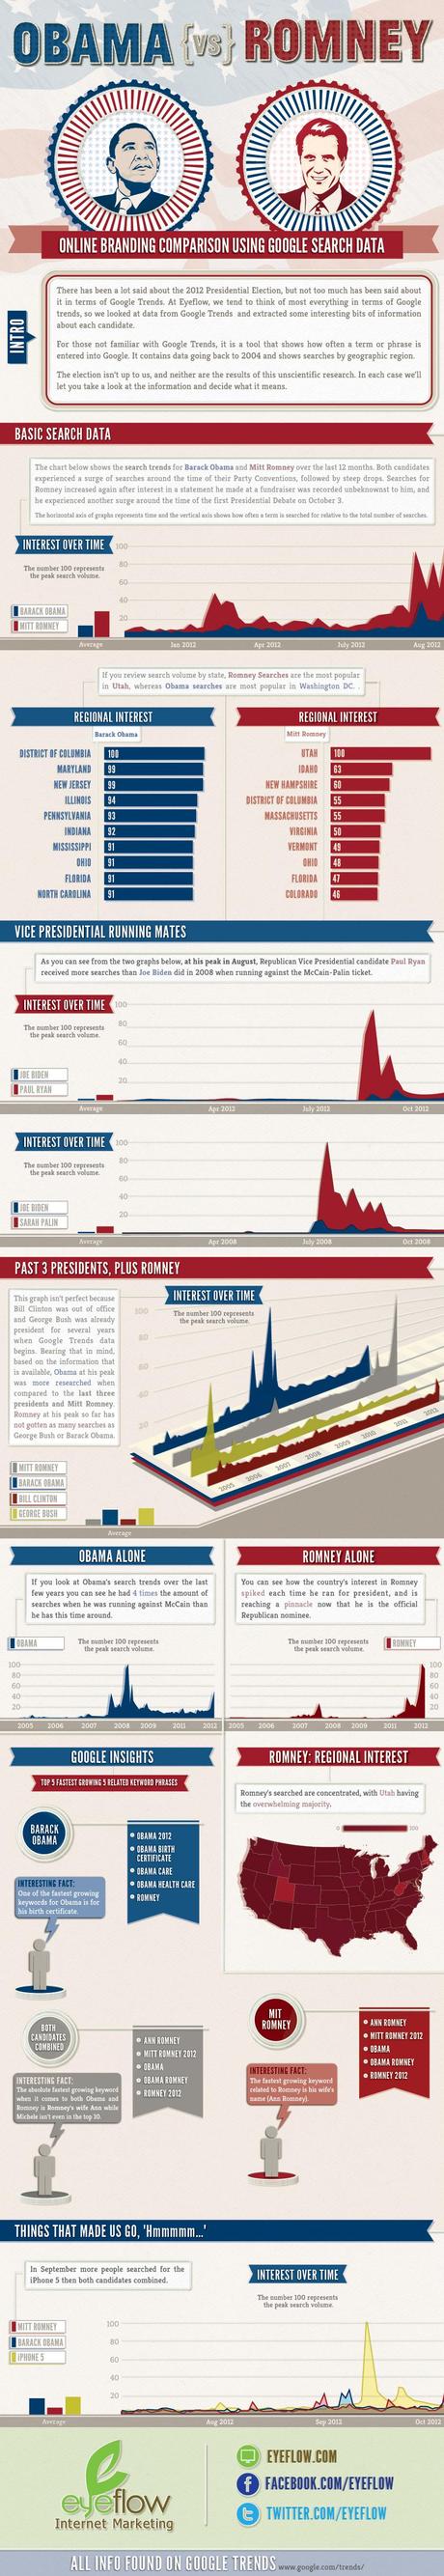 Google Trends Data For Obama vs Romney Infographic